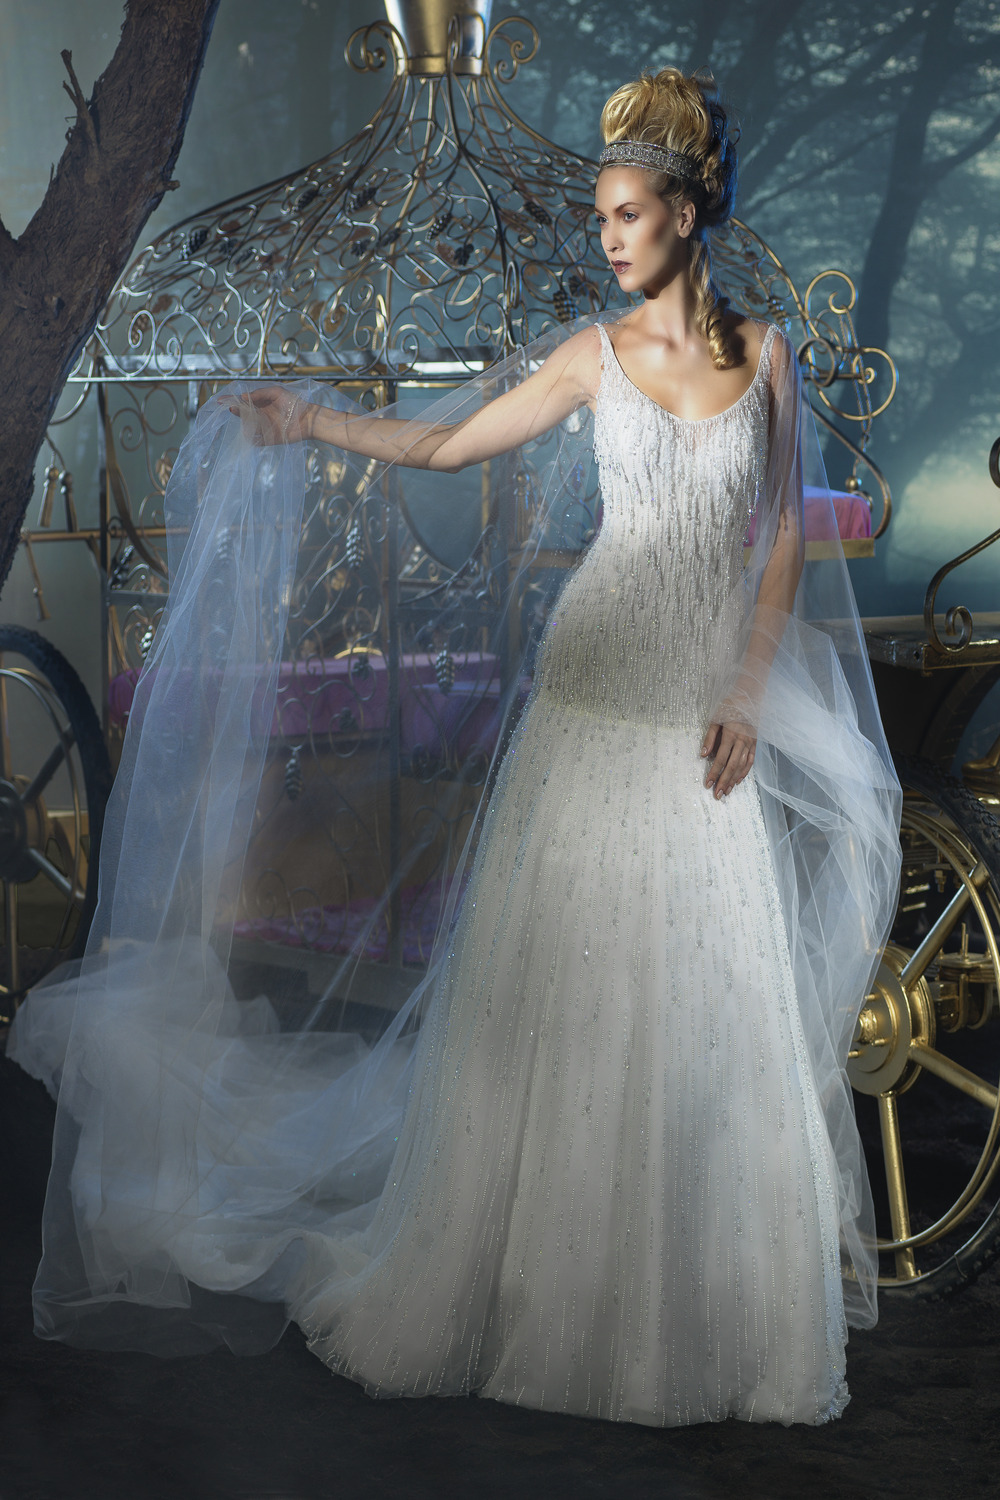 fashion atelier by darsara dar satra 4538695 Stunning bridal and wedding dresses available for rental in Dubai, UAE